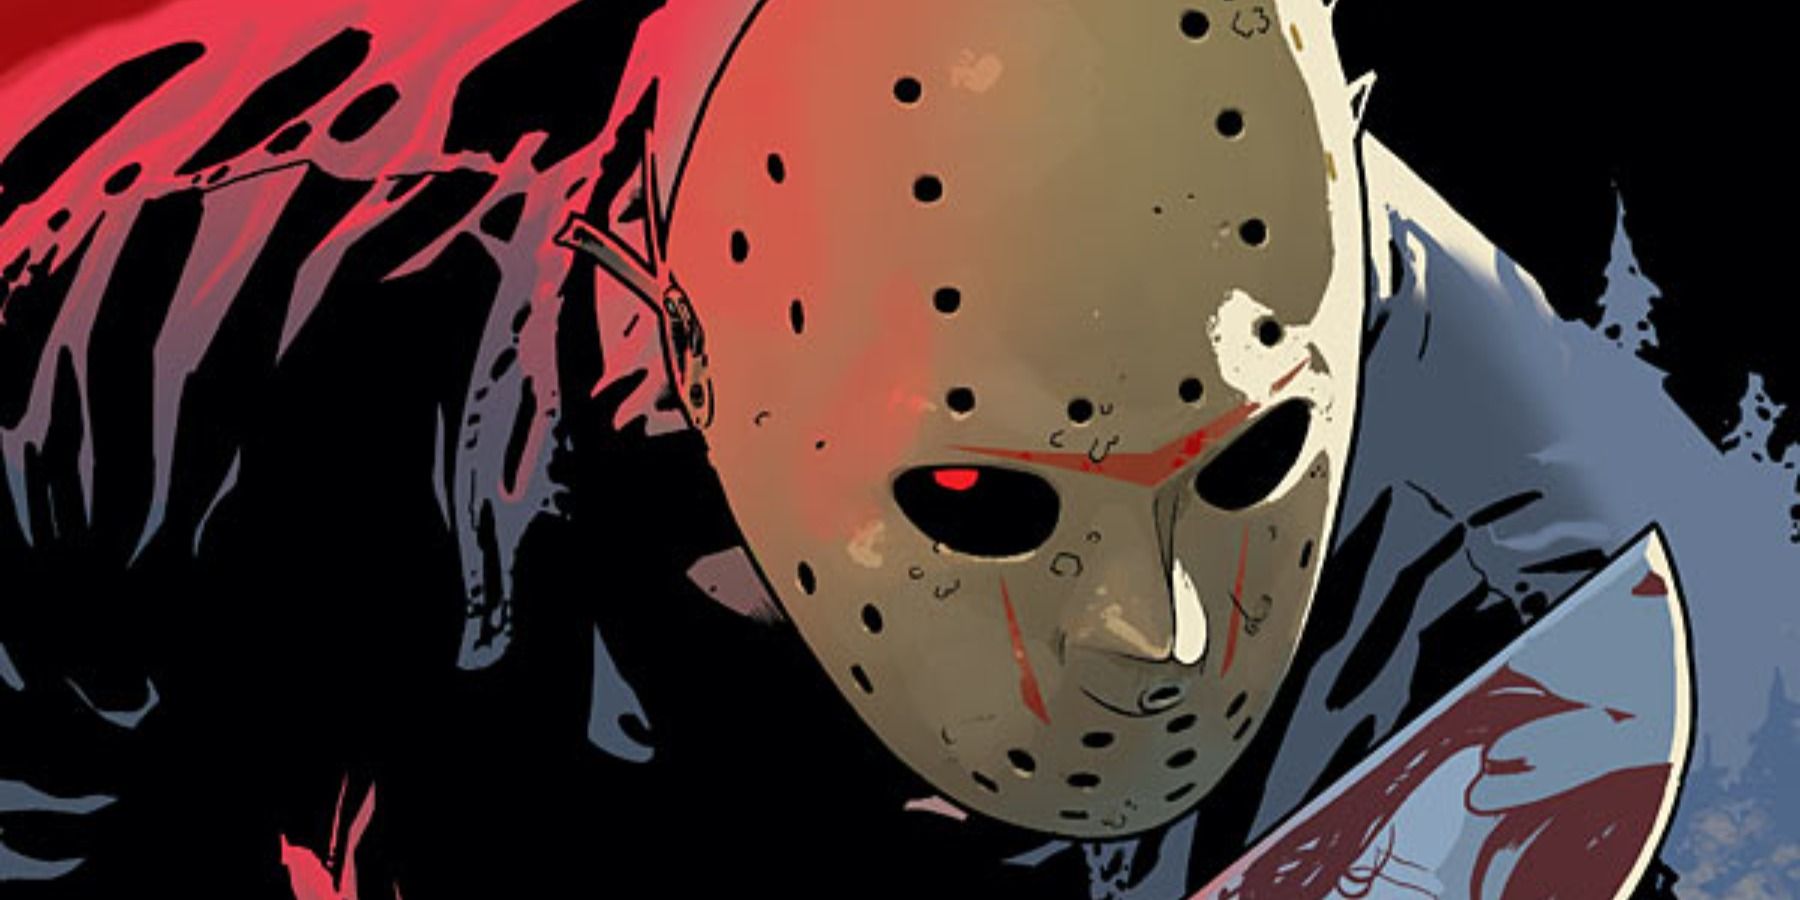 Is Jason really evil?